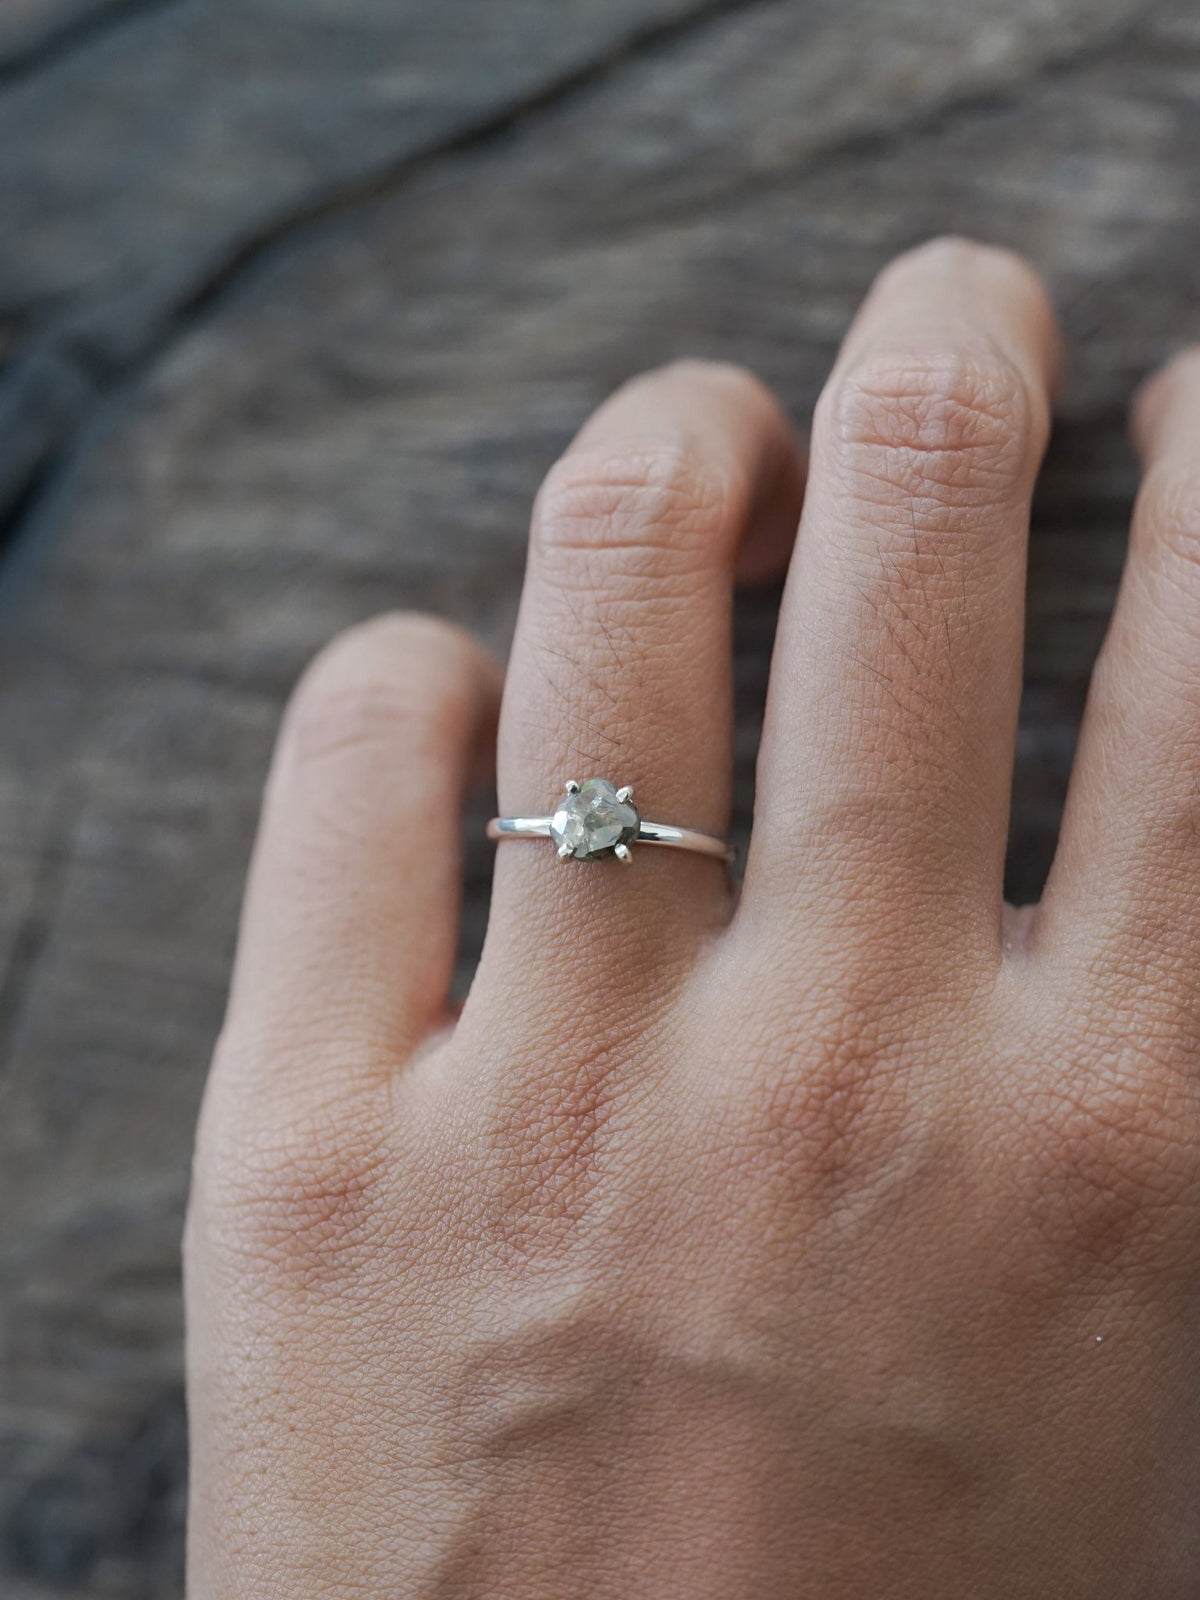 Simple Wedding Ring Set, Bespoke Engagement Ring, Minimalist Wedding Ring  Set, Dainty Diamond Ring Set, V Ring, 0.2 Carat Diamond Ring -  Canada